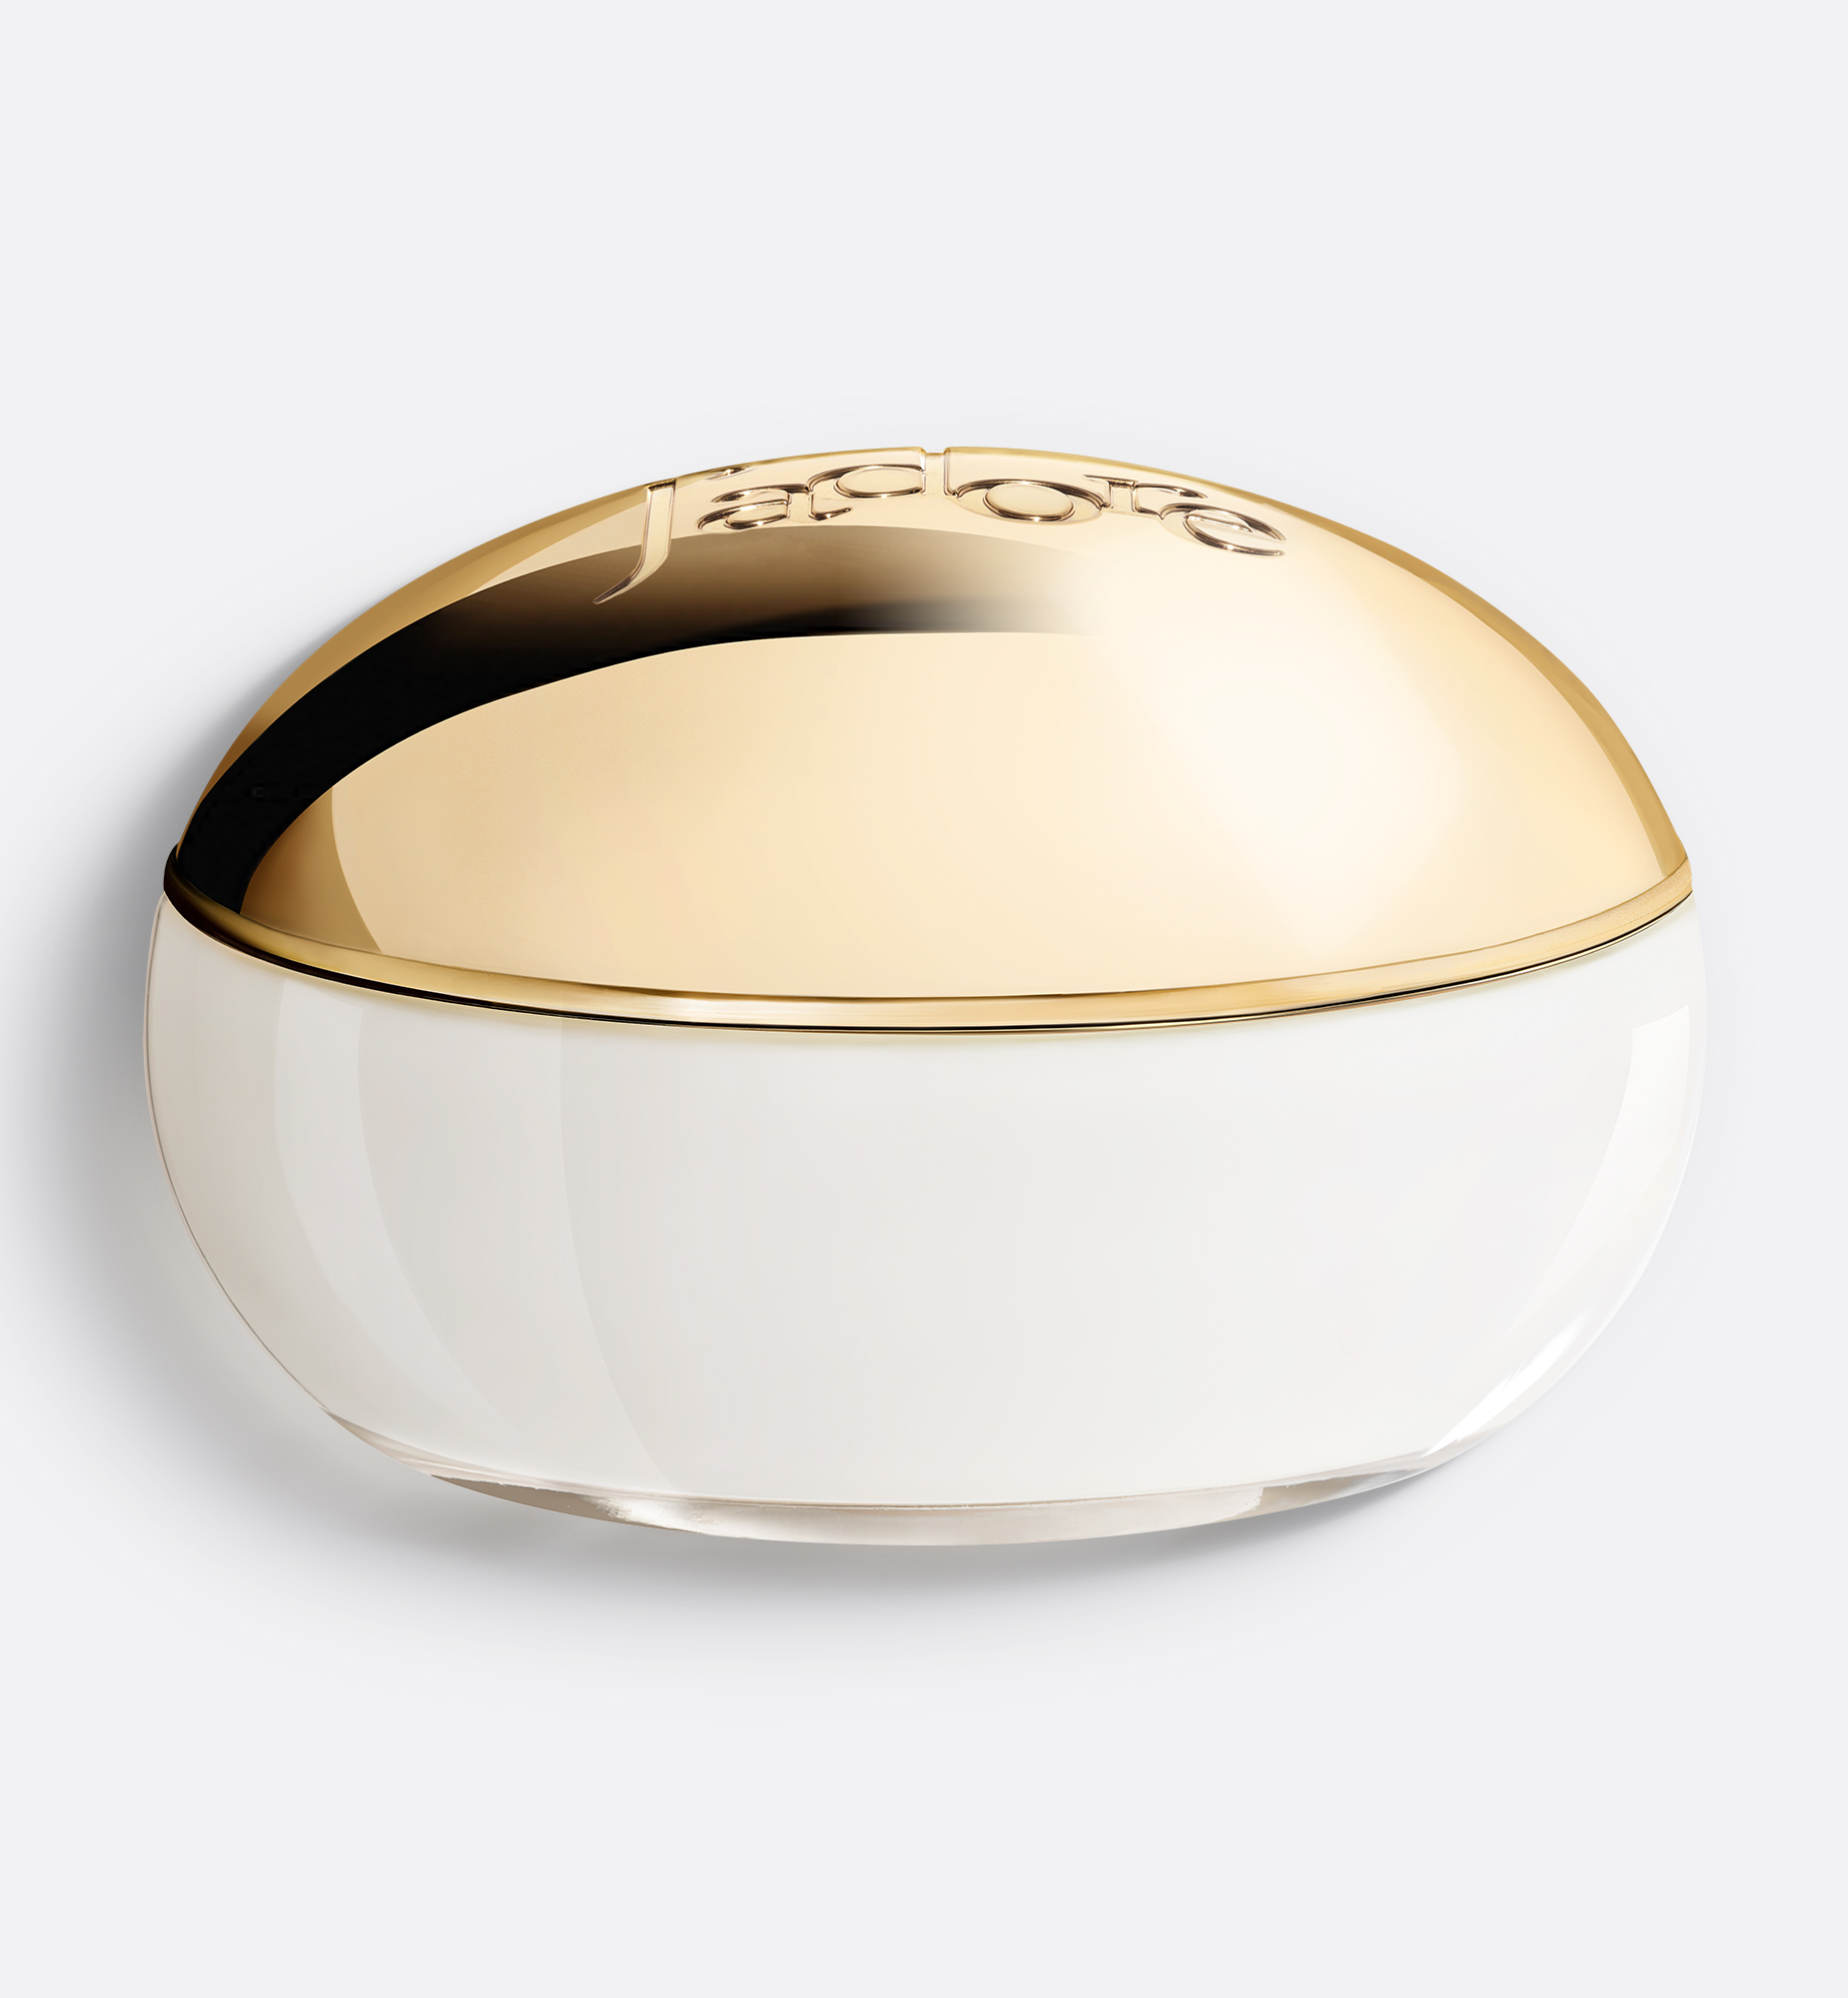 Dior Scented Body Cream Jar 5 oz